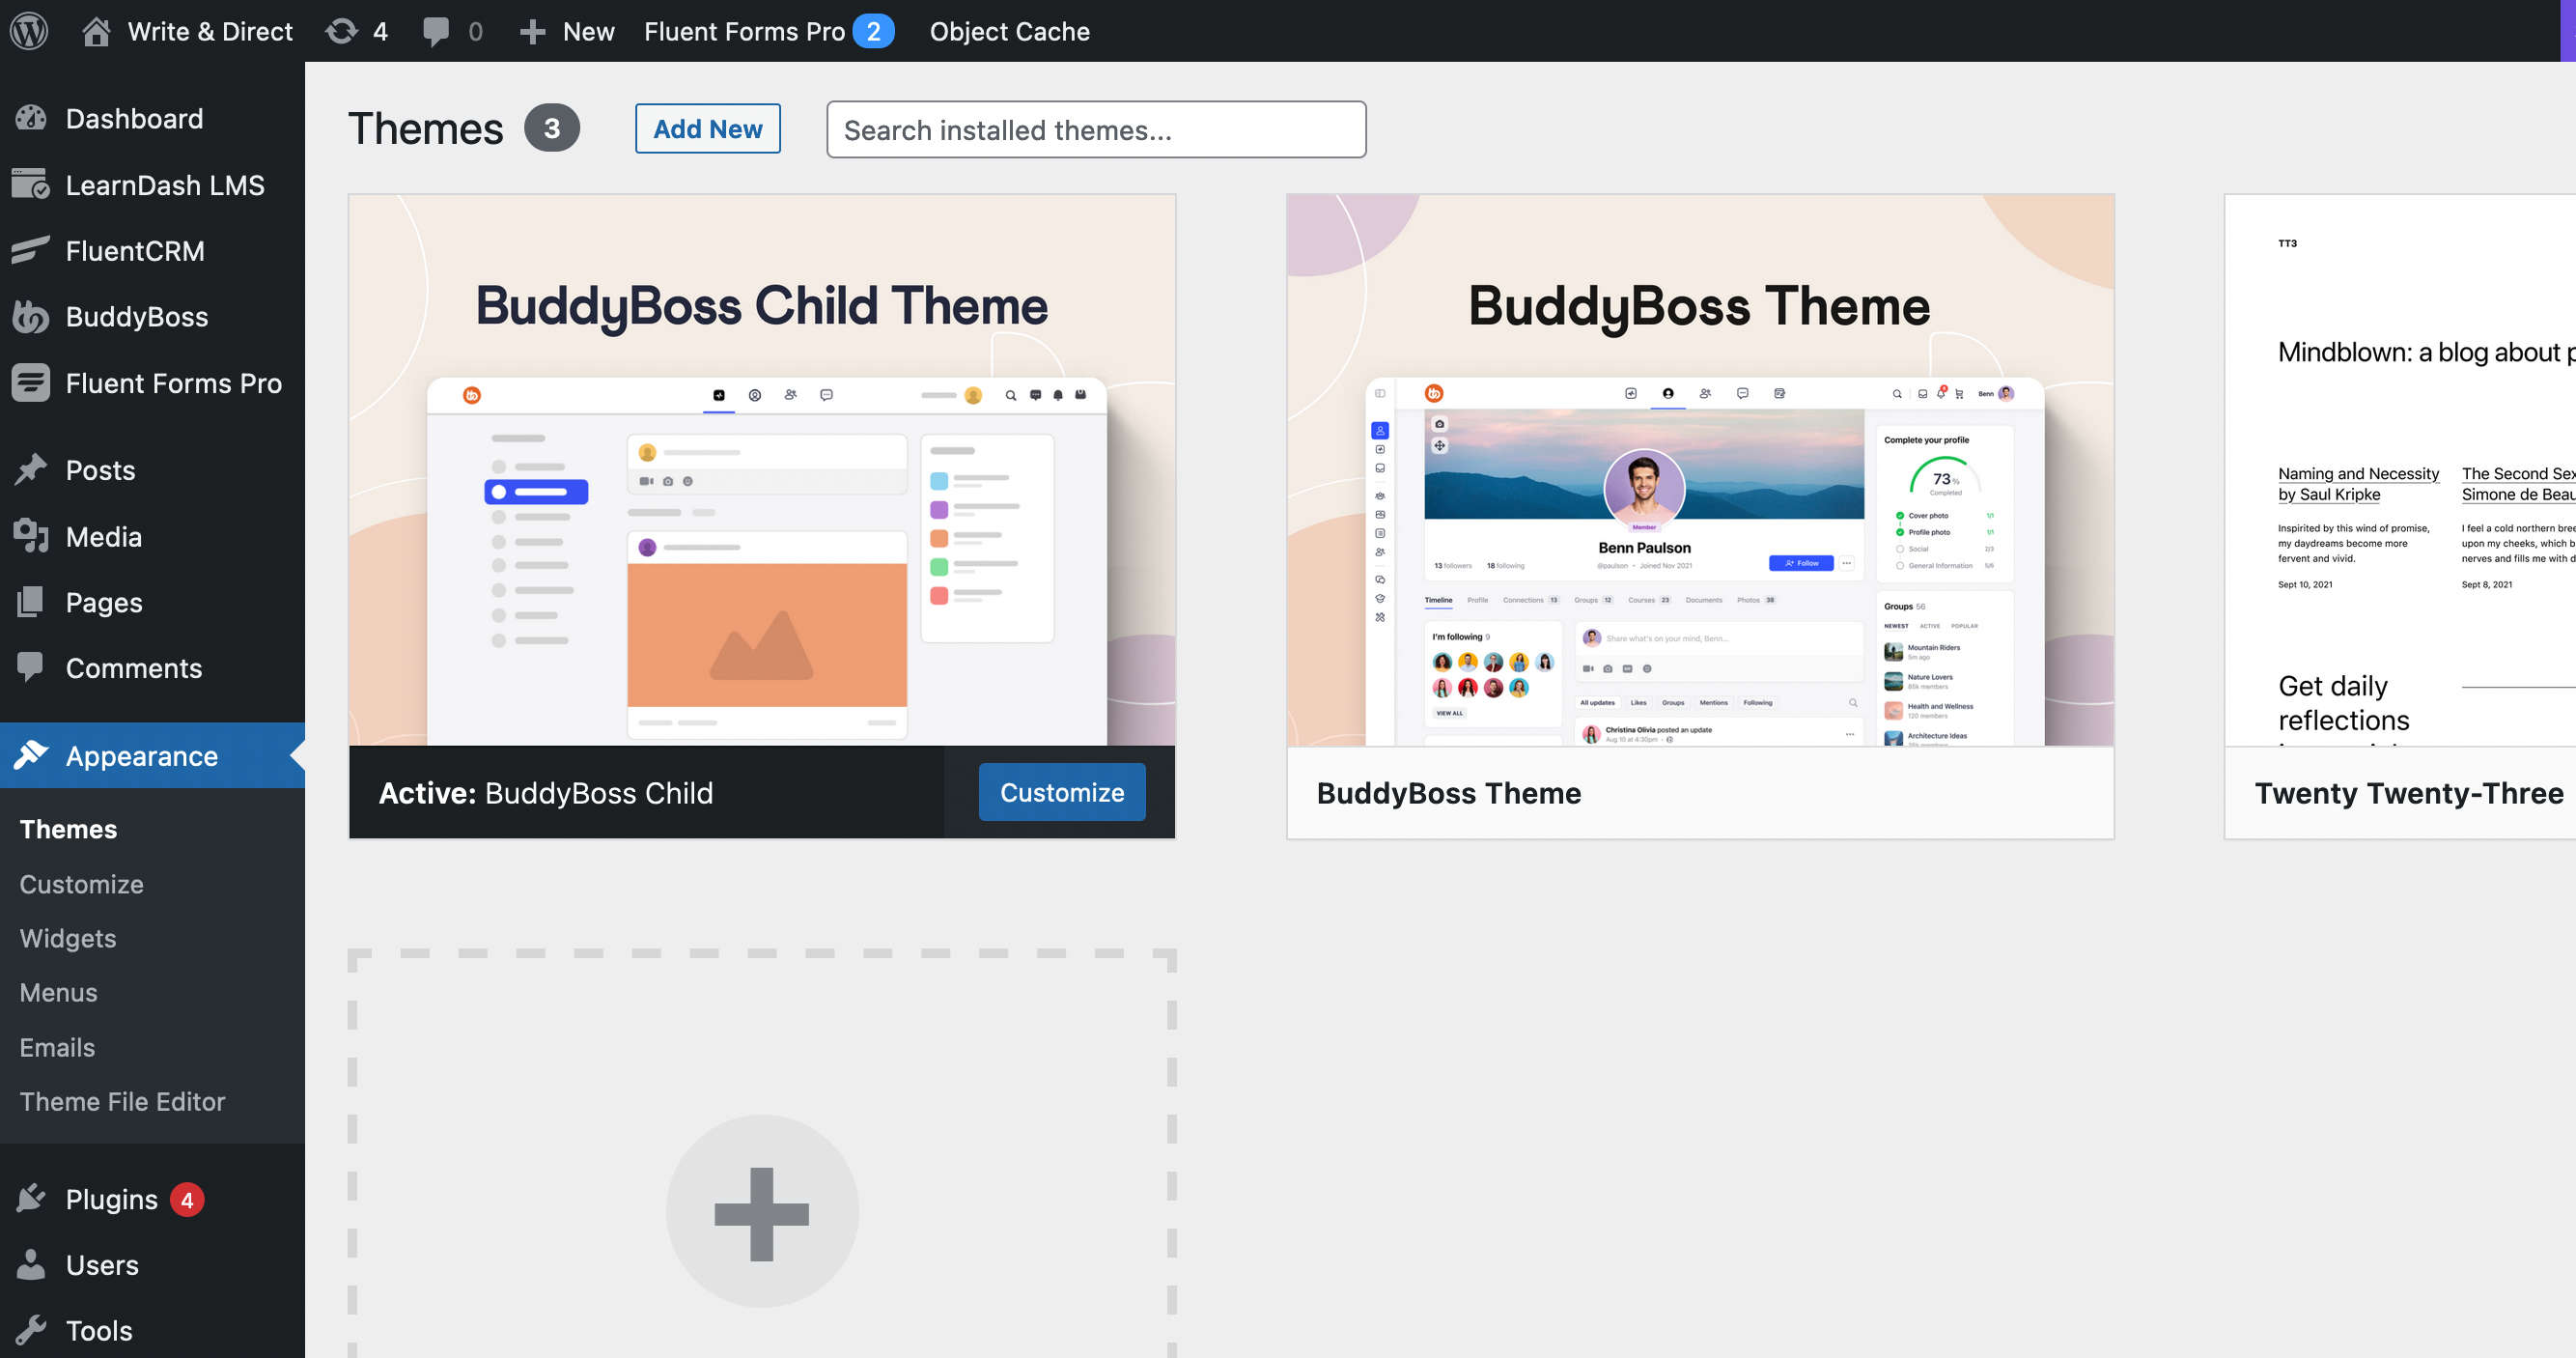 How to Customize BuddyBoss Theme – Add A Blank Page